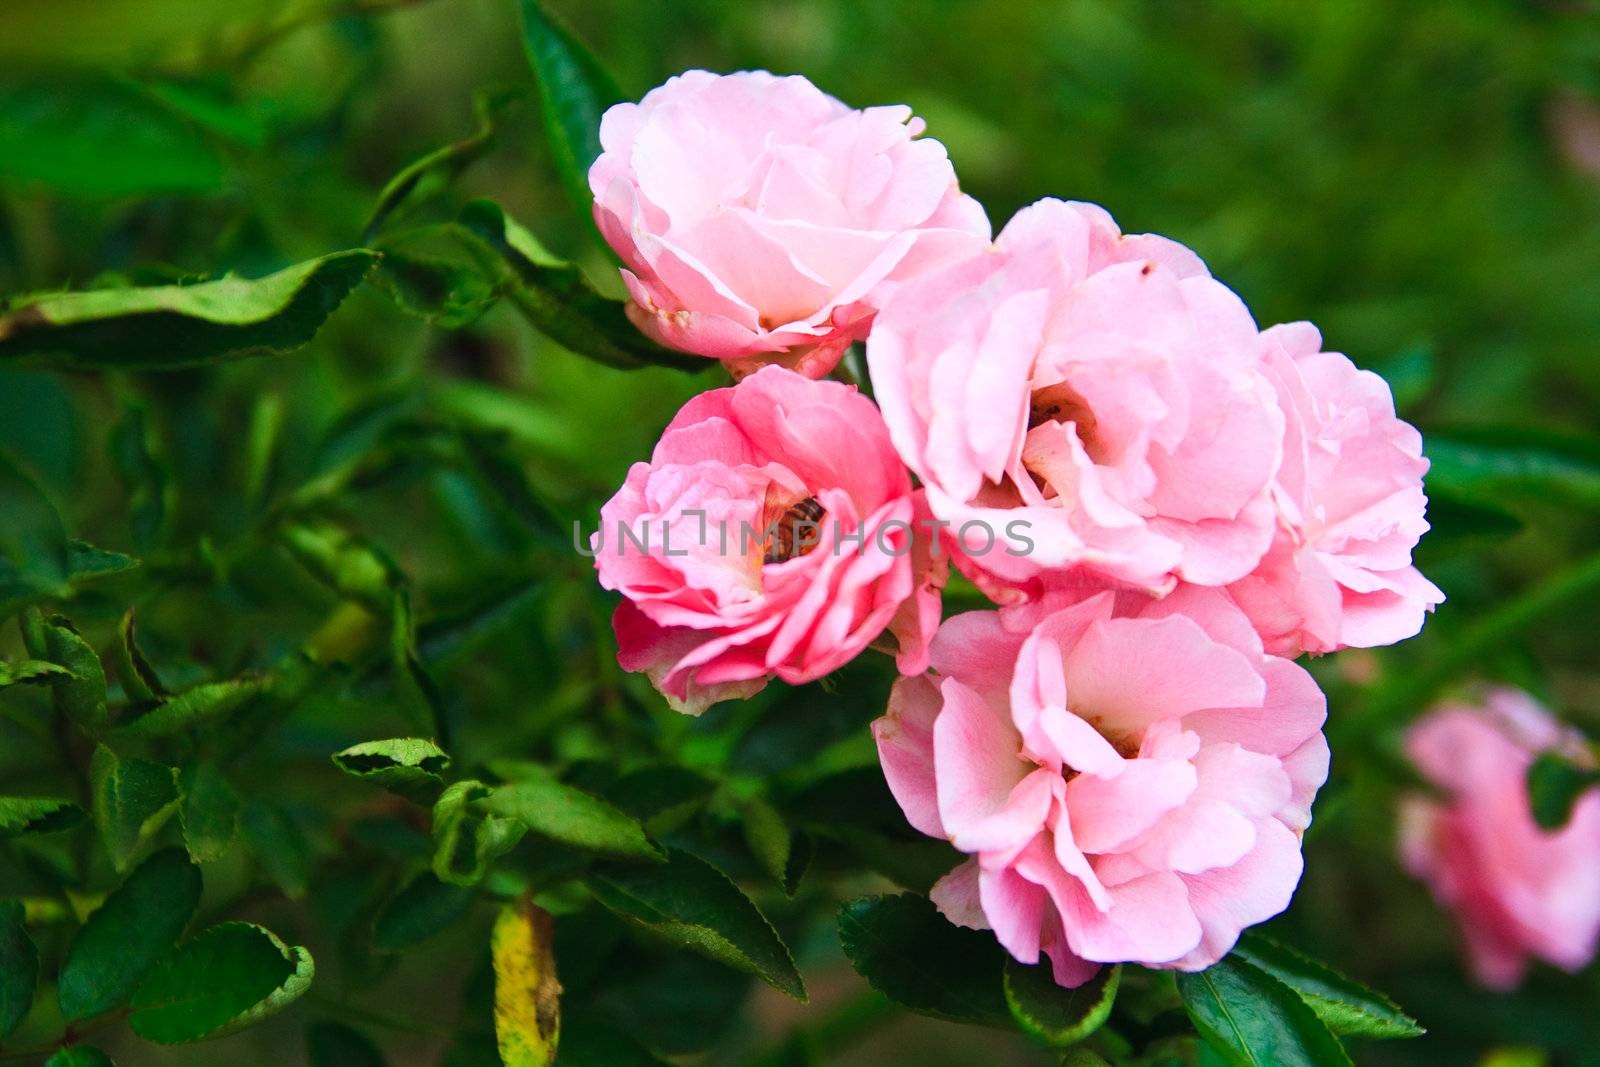 Pink roses called "Ariana rose"